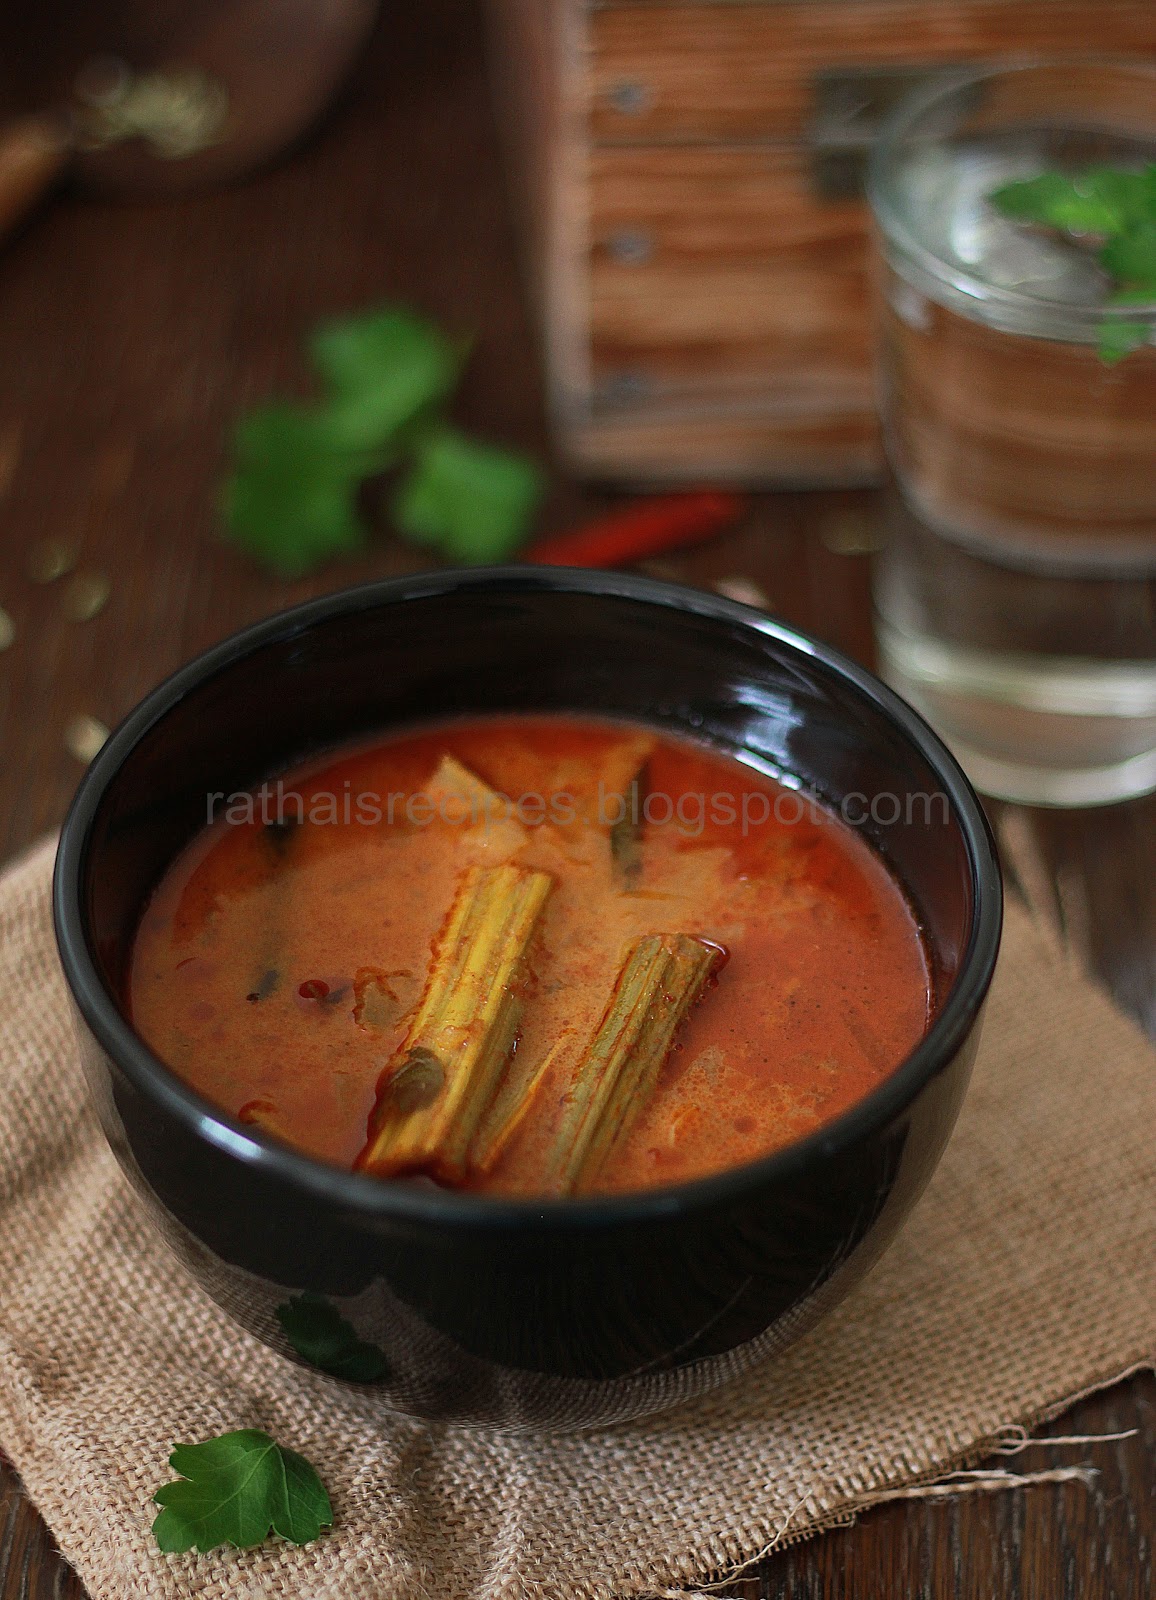 Rathai's Recipes: Drumstick curry - Murungai kai curry